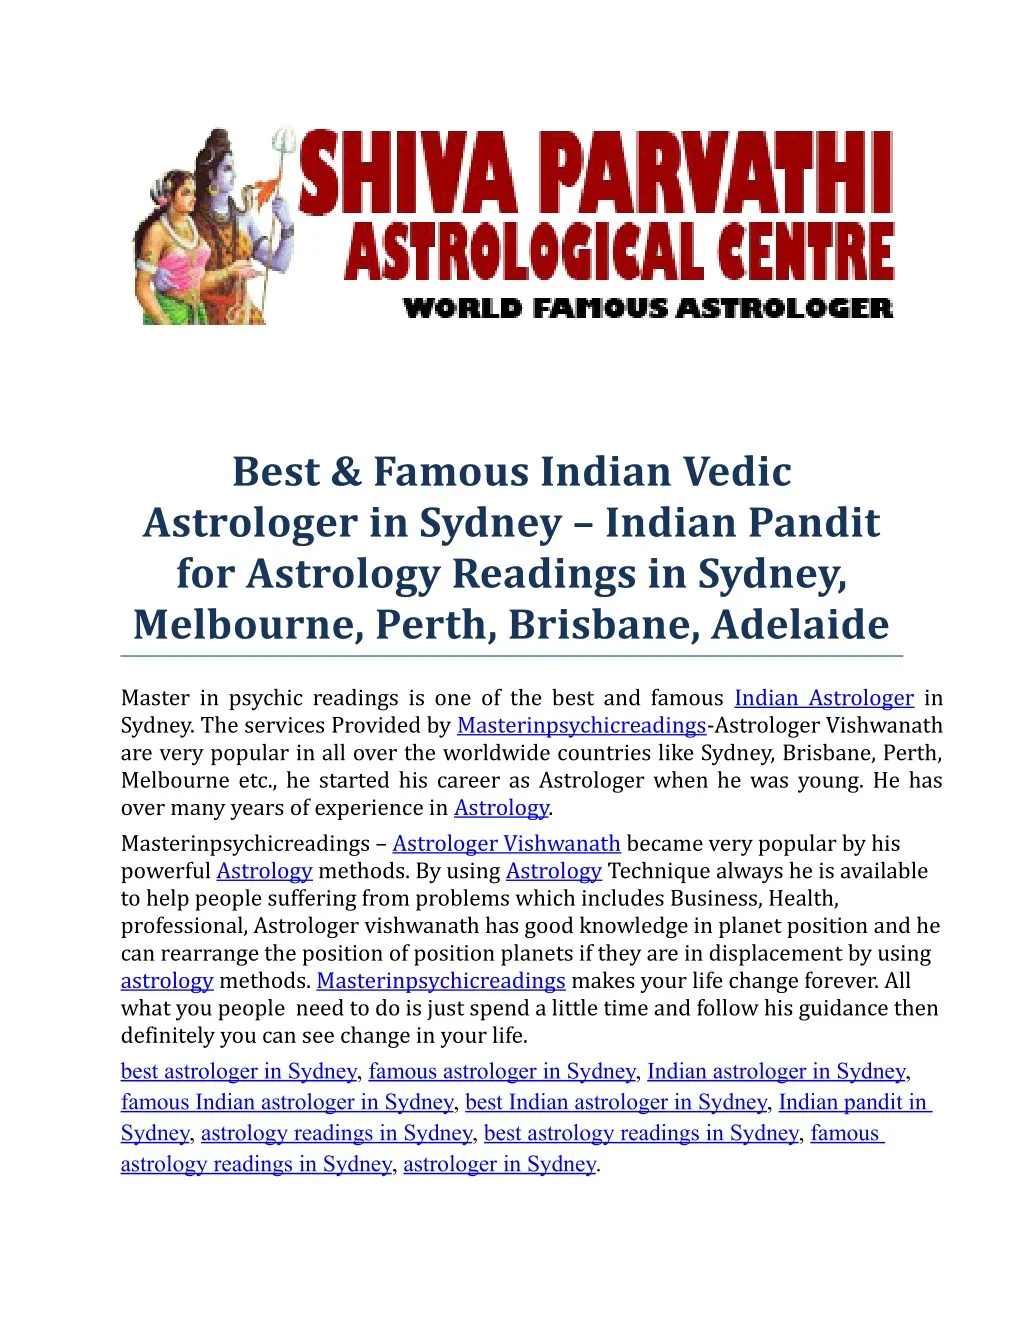 best famous indian vedic astrologer in sydney